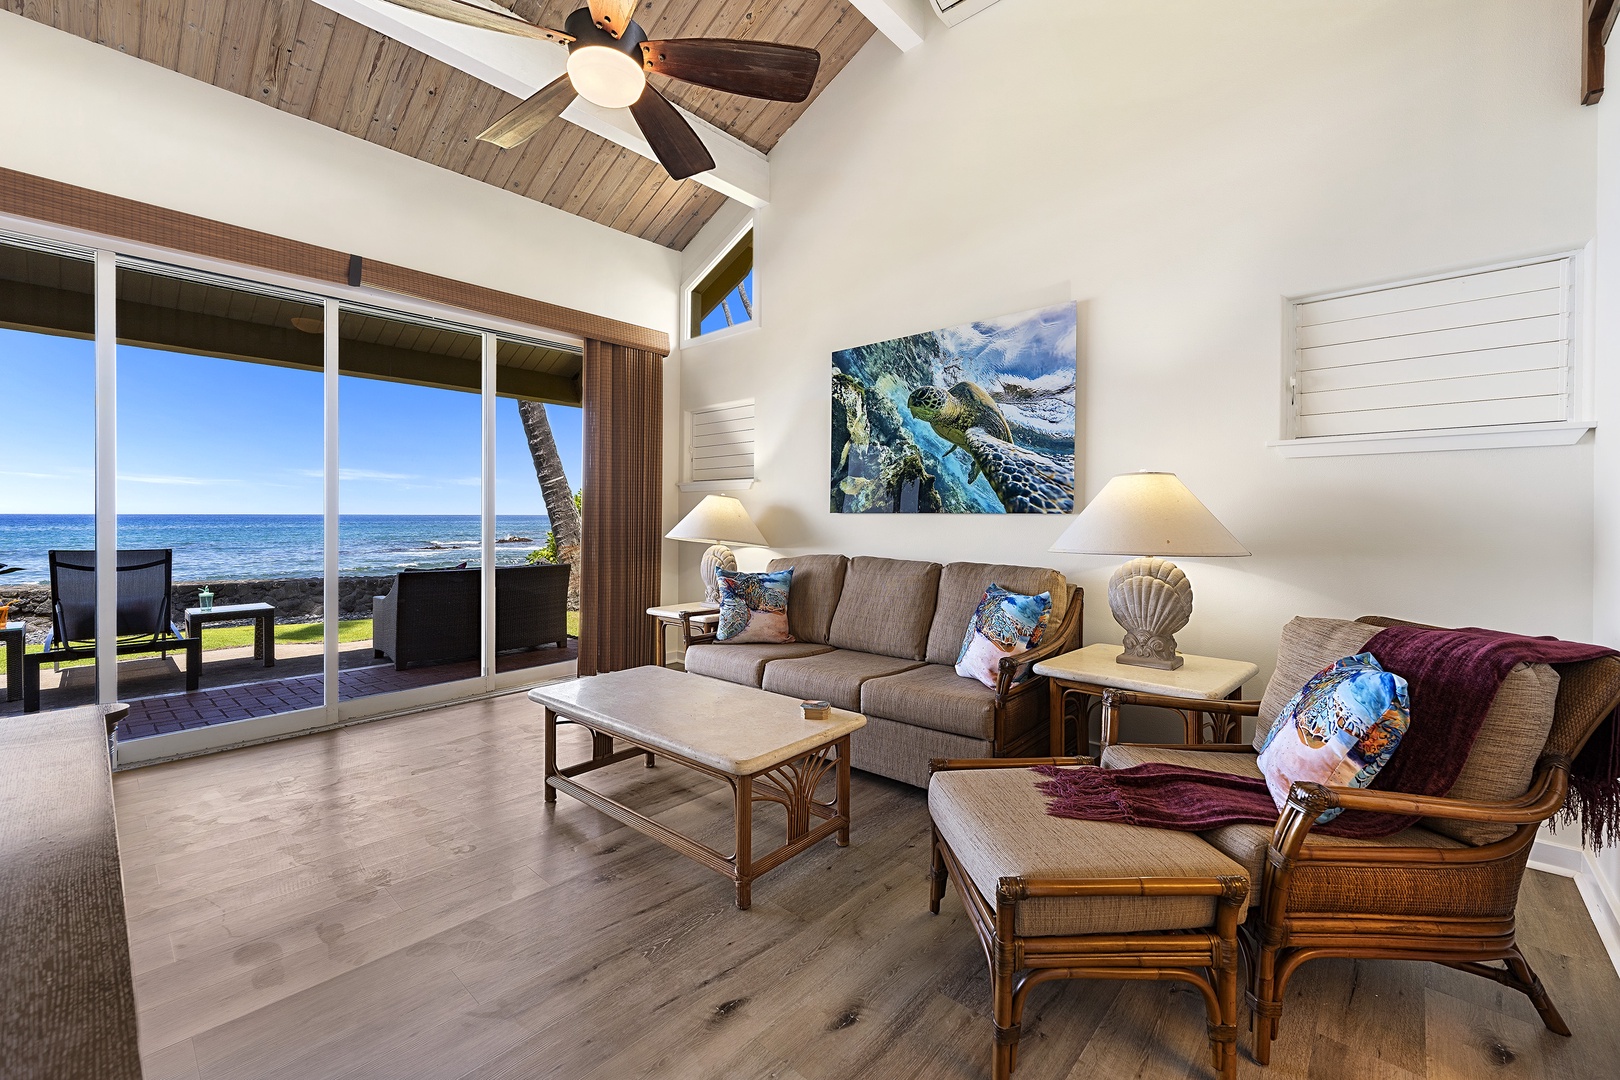 Kailua Kona Vacation Rentals, Hale Pua - Ohana Suite downstairs with Lanai access, Queen sleeper sofa, and TV